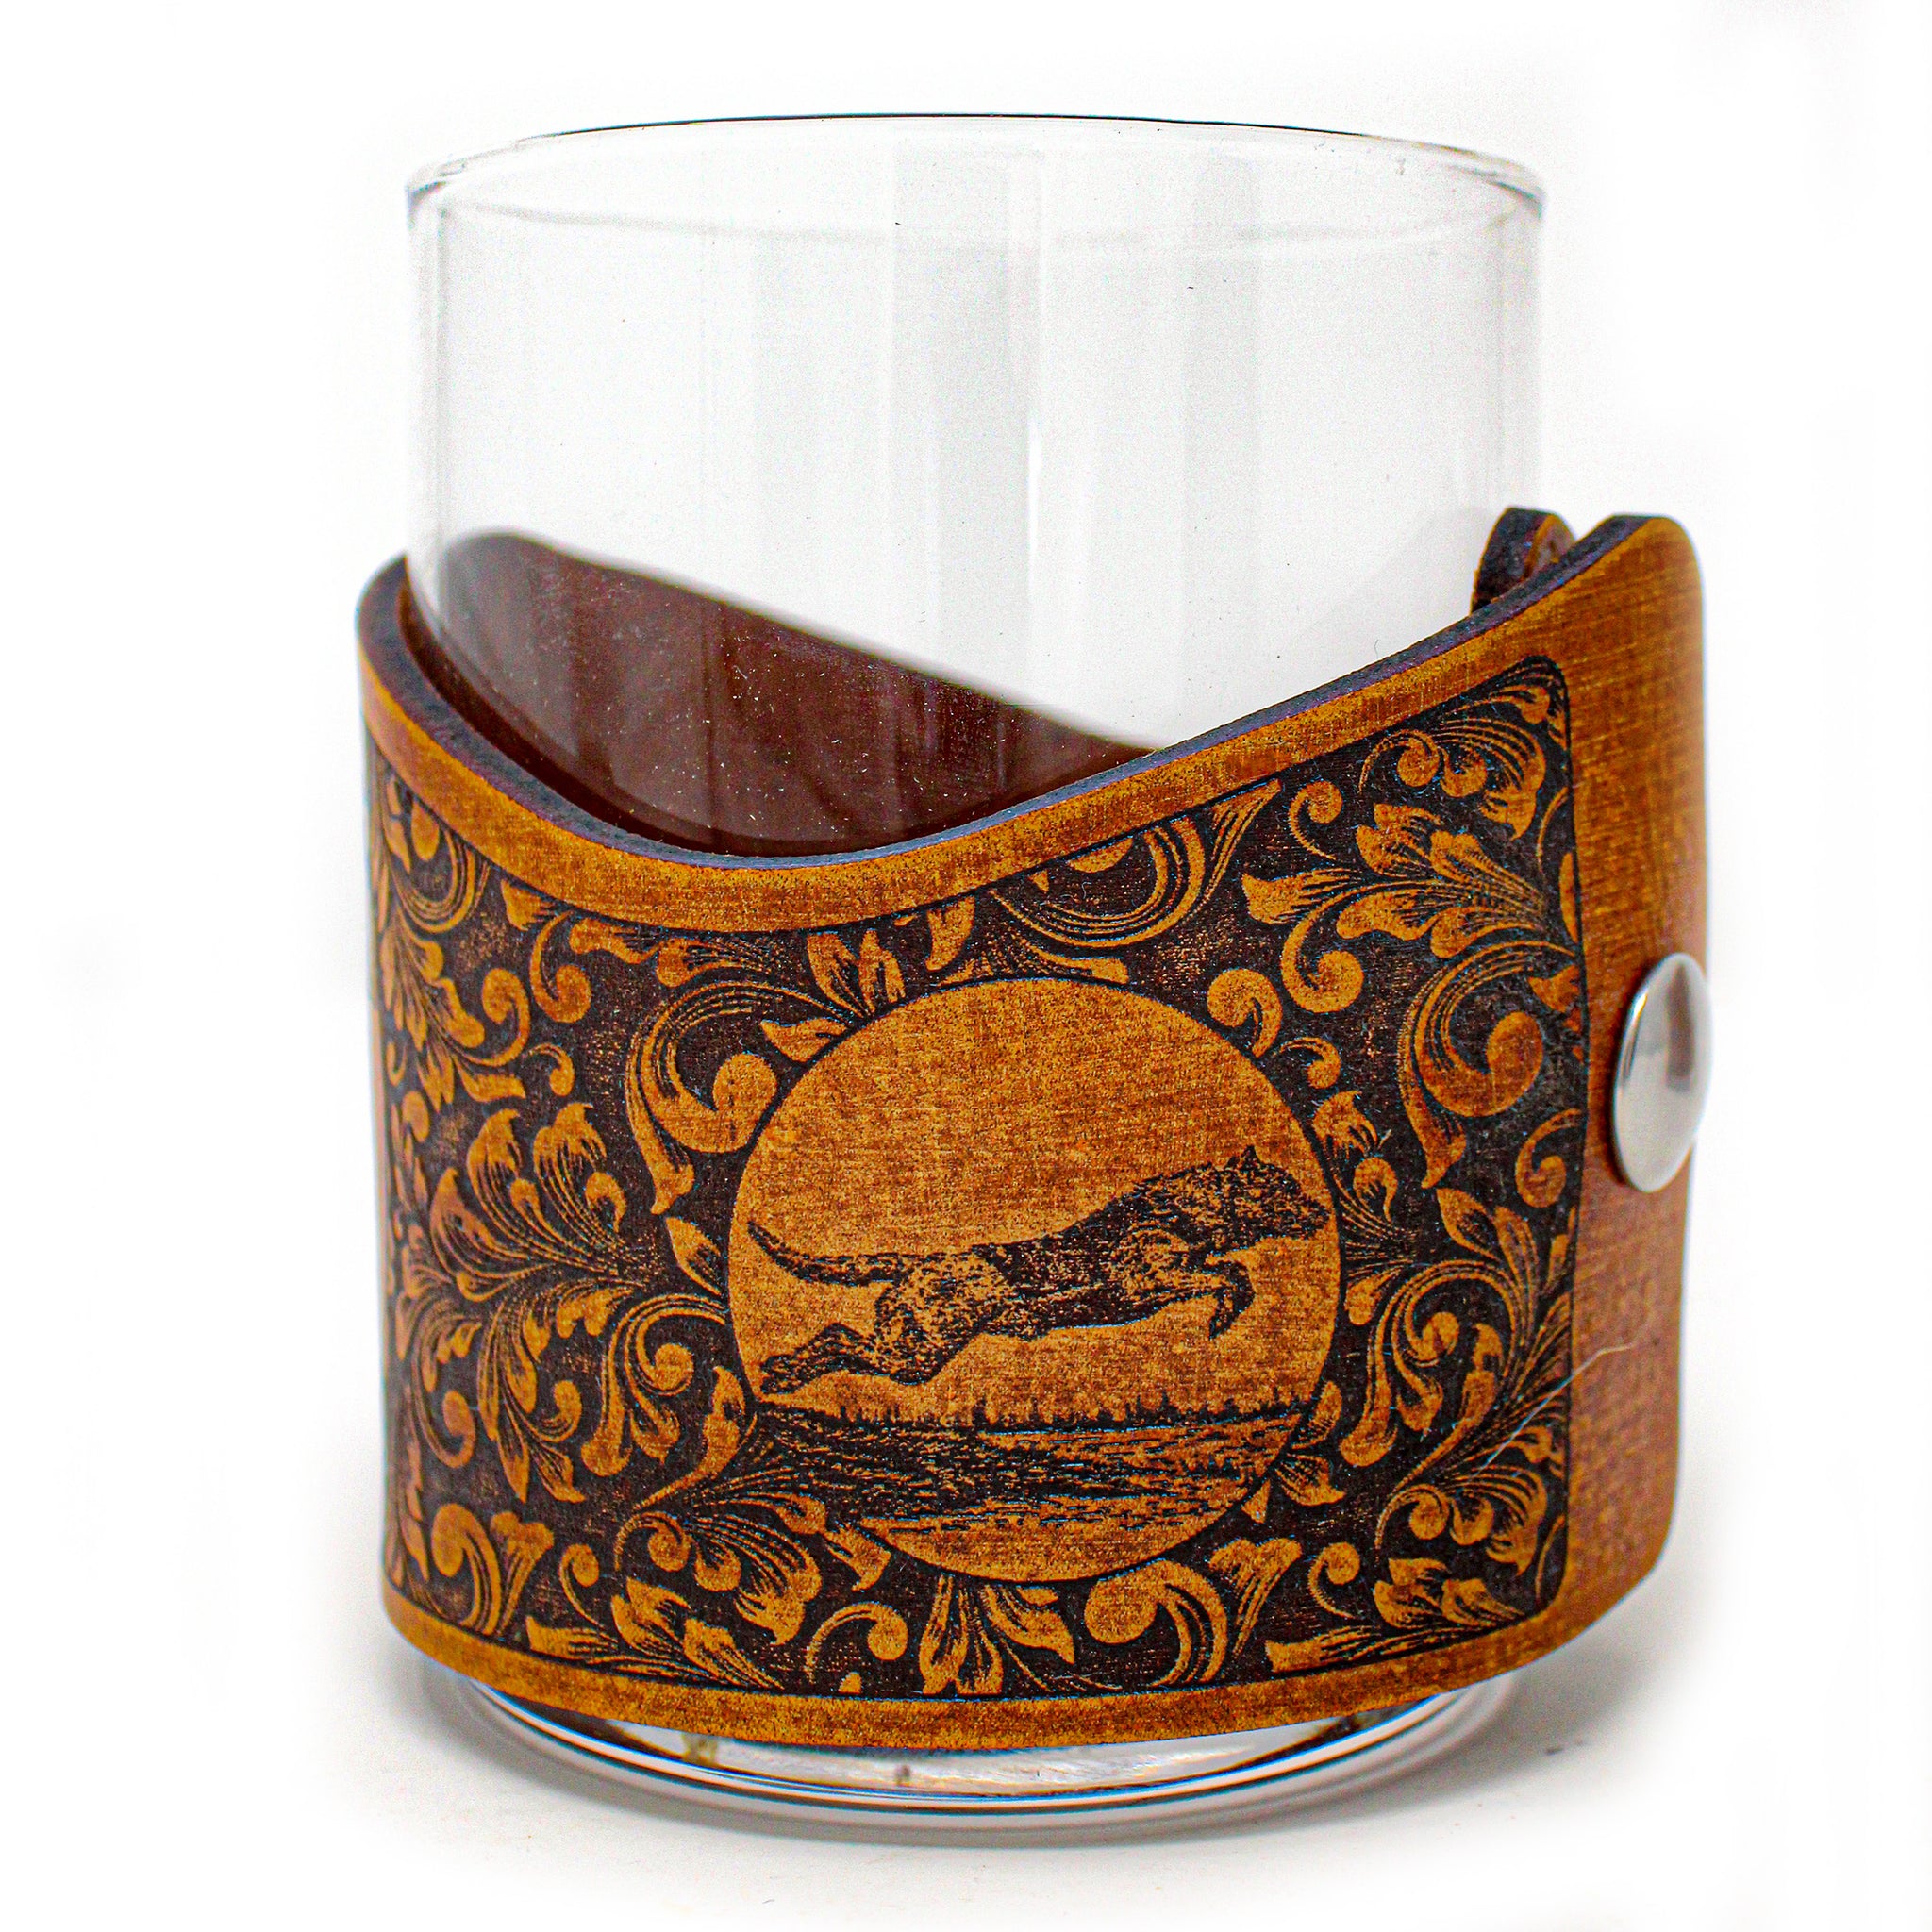 Whiskey Glass Leather Wrap - Mallards Bird Dog Engraver glass